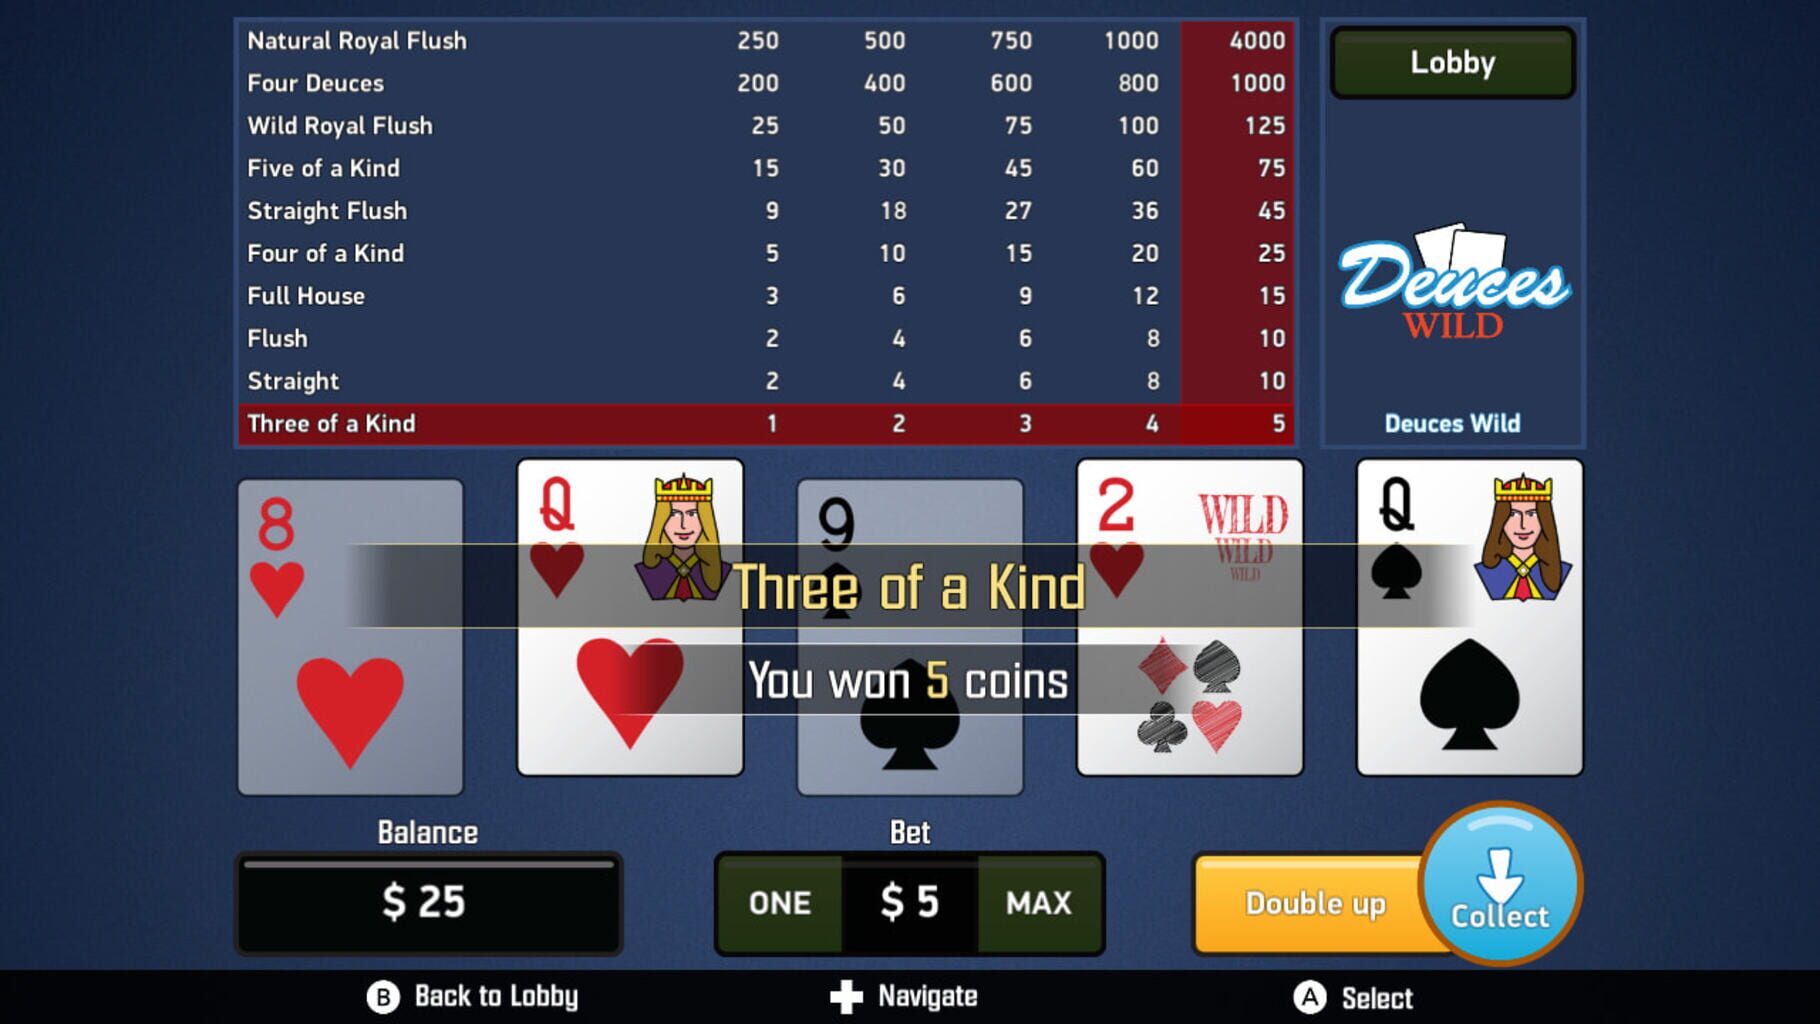 Deuces Wild - Video Poker screenshot